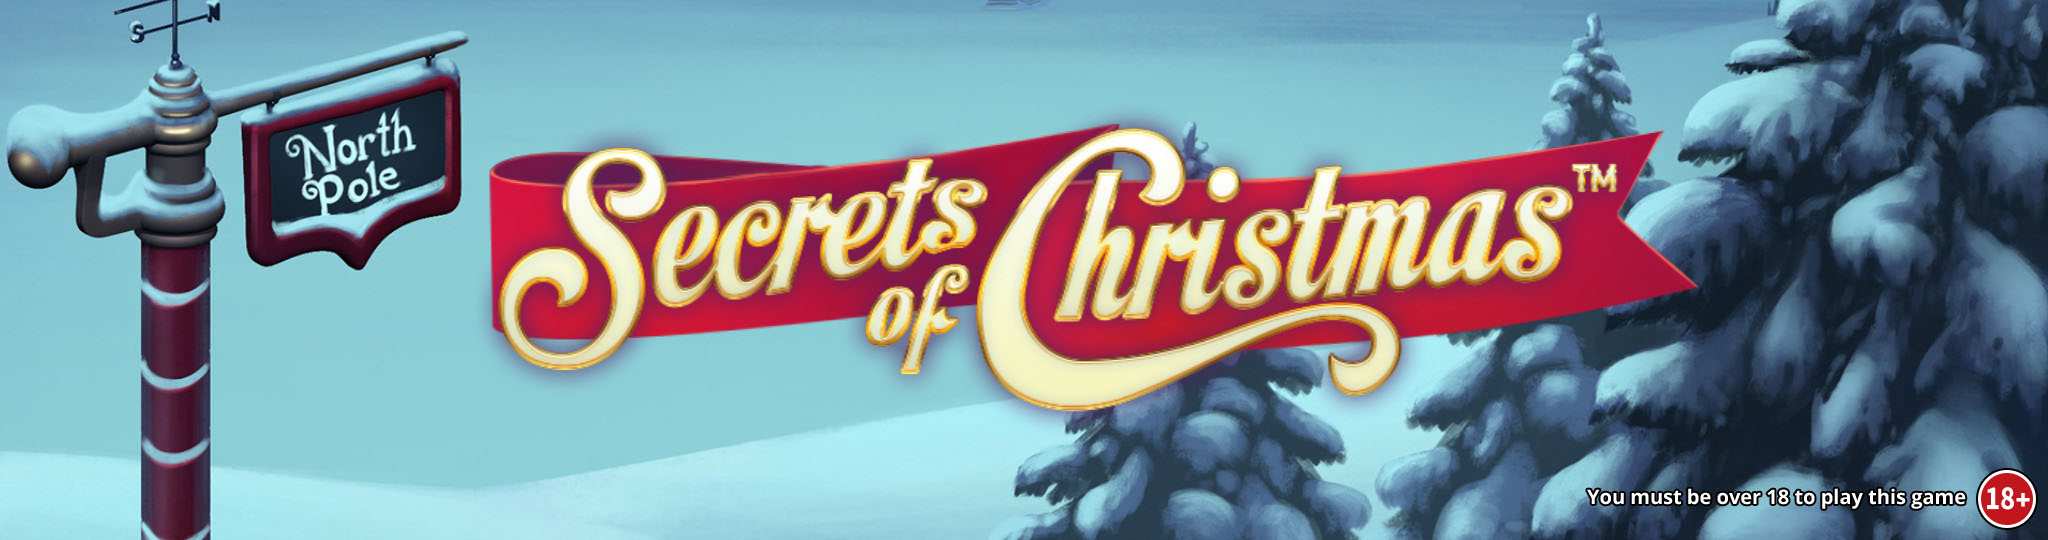 secrets of christmas